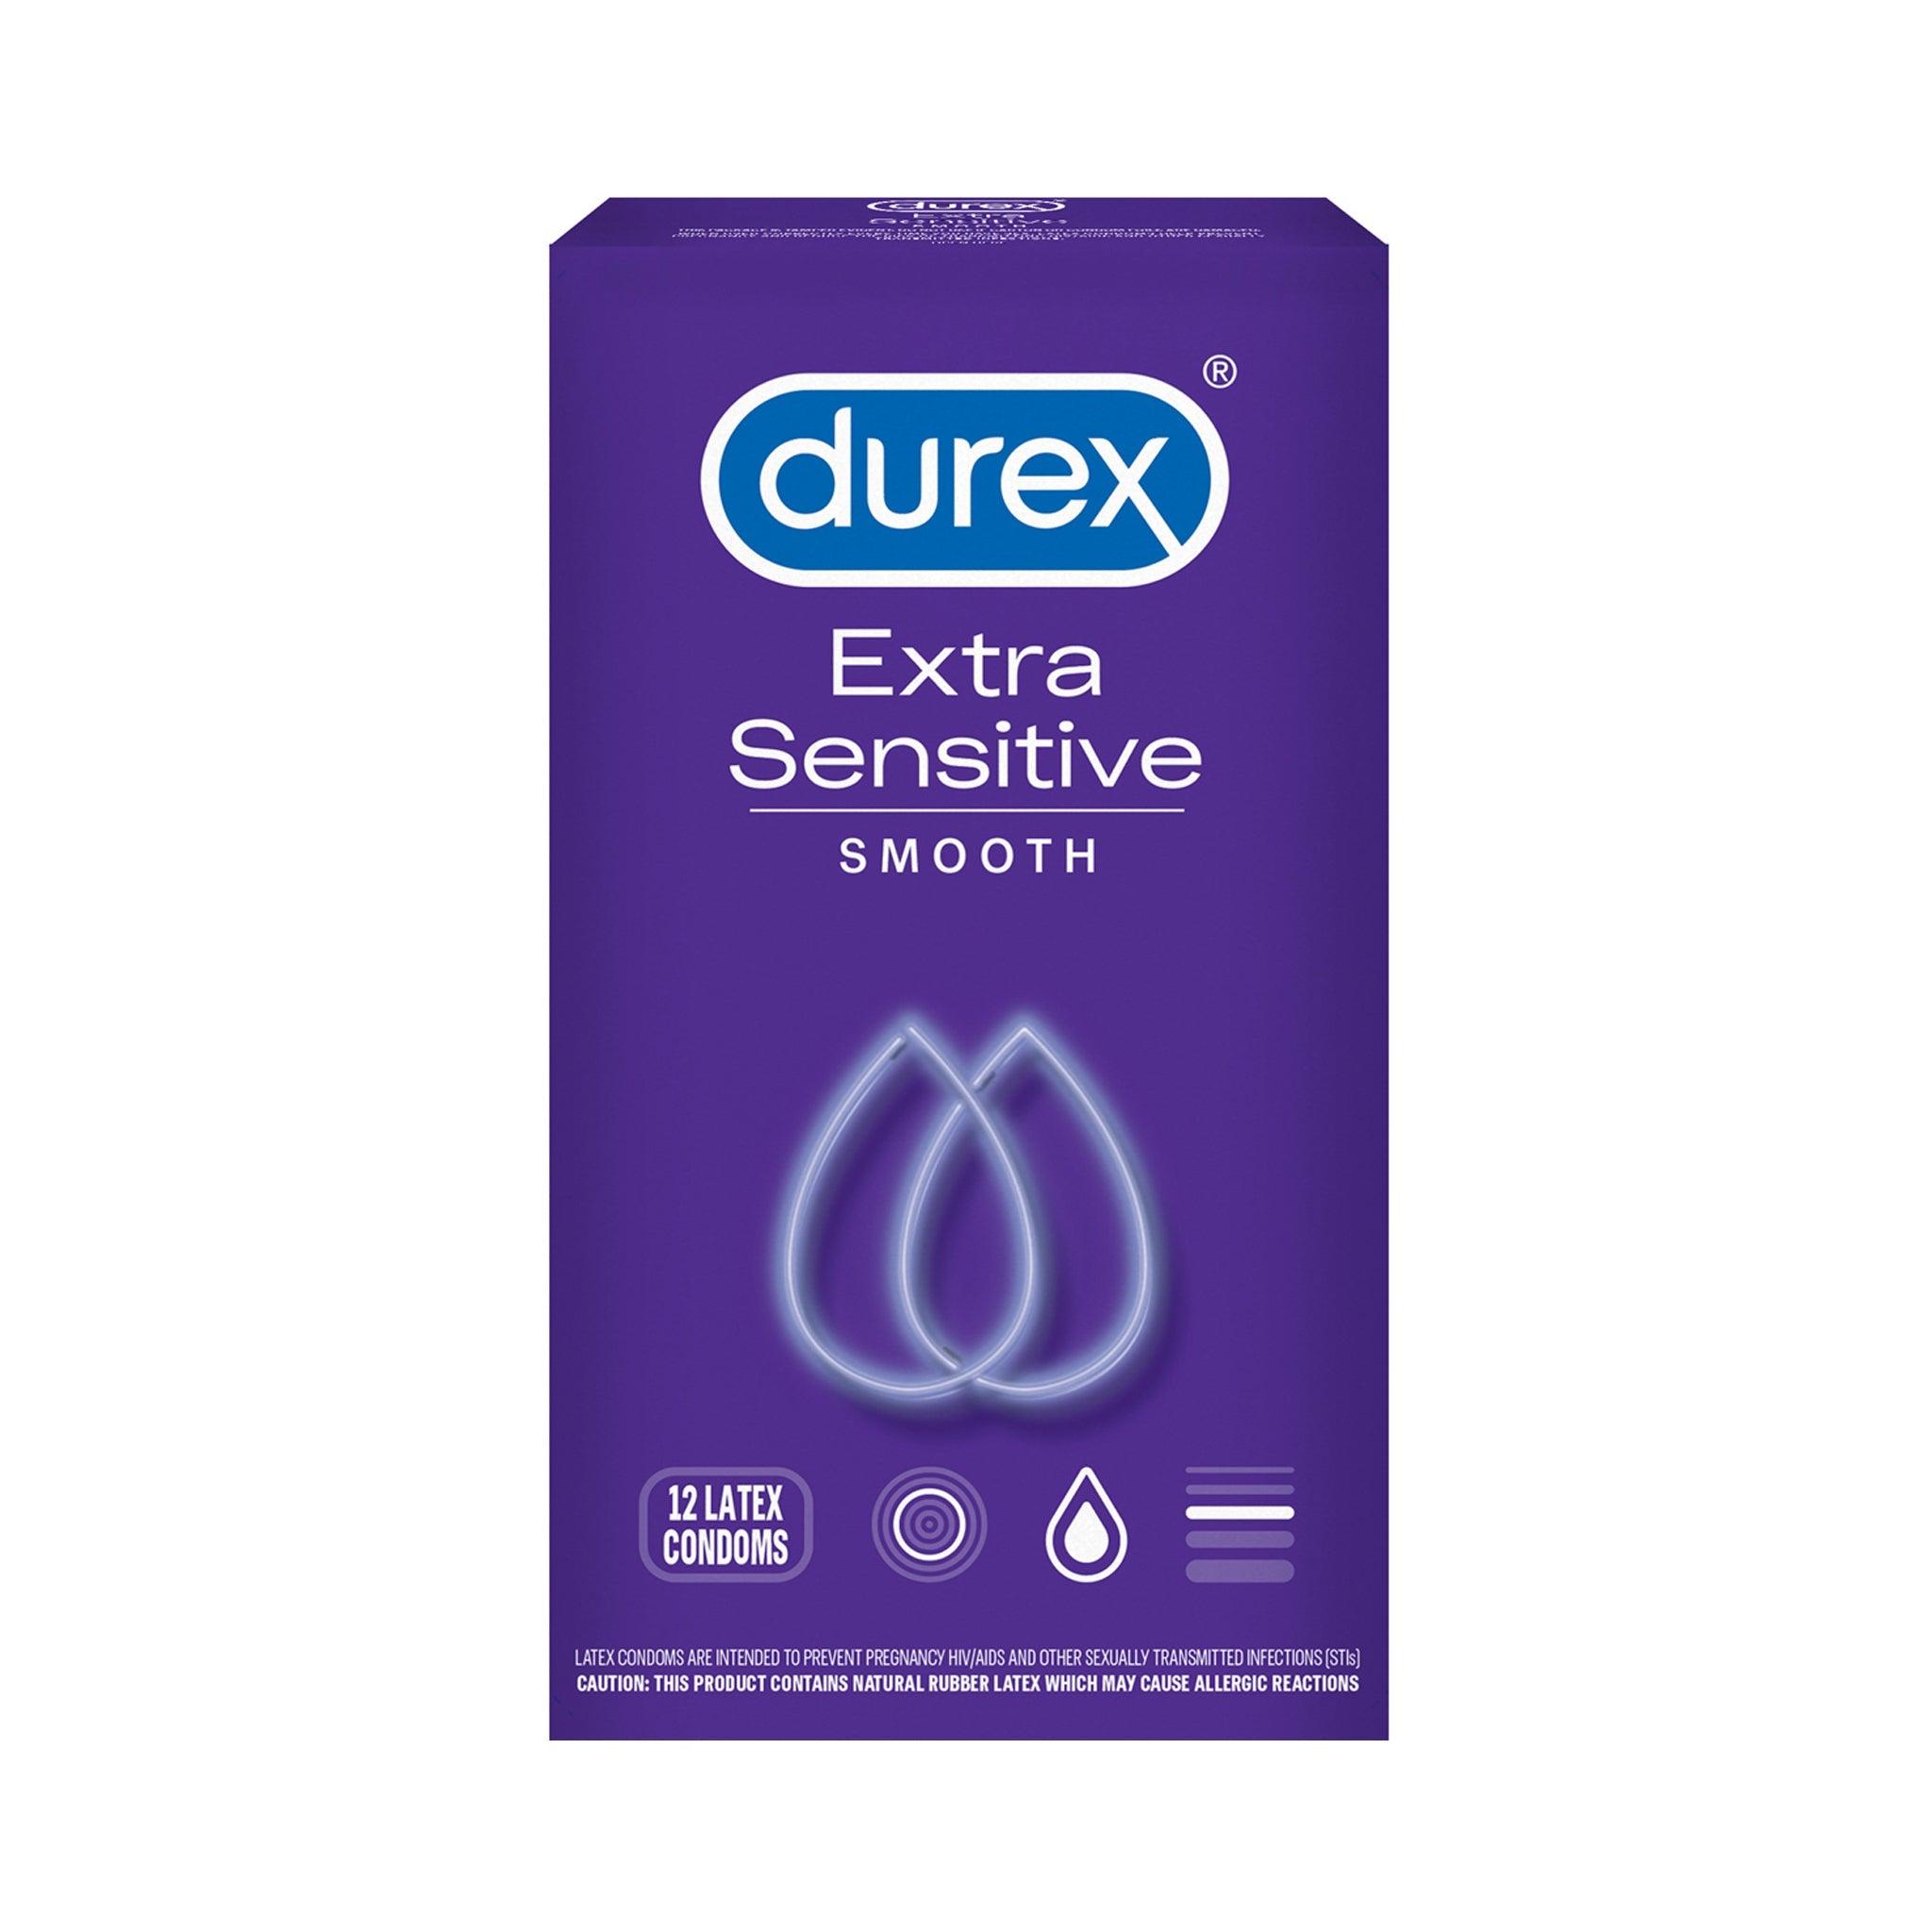 Durex Extra Sensitive Smooth Condoms 12-Pack - CheapLubes.com